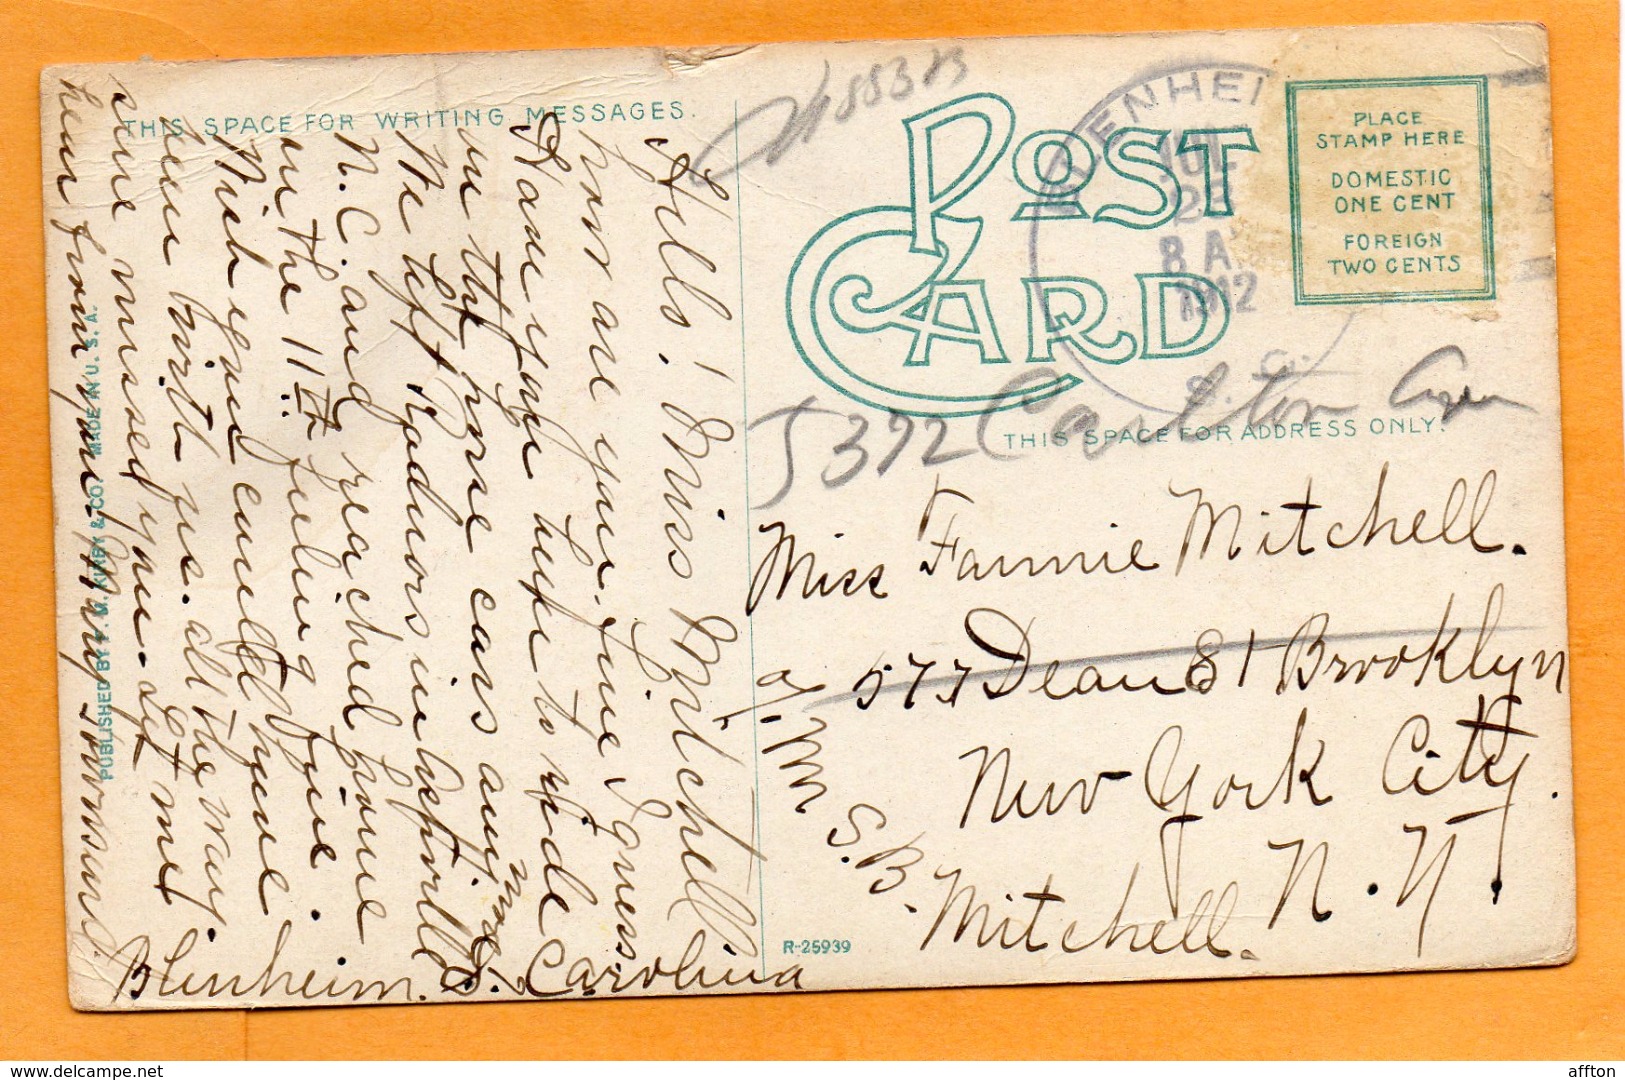 Columbia SC 1910 Postcard - Columbia